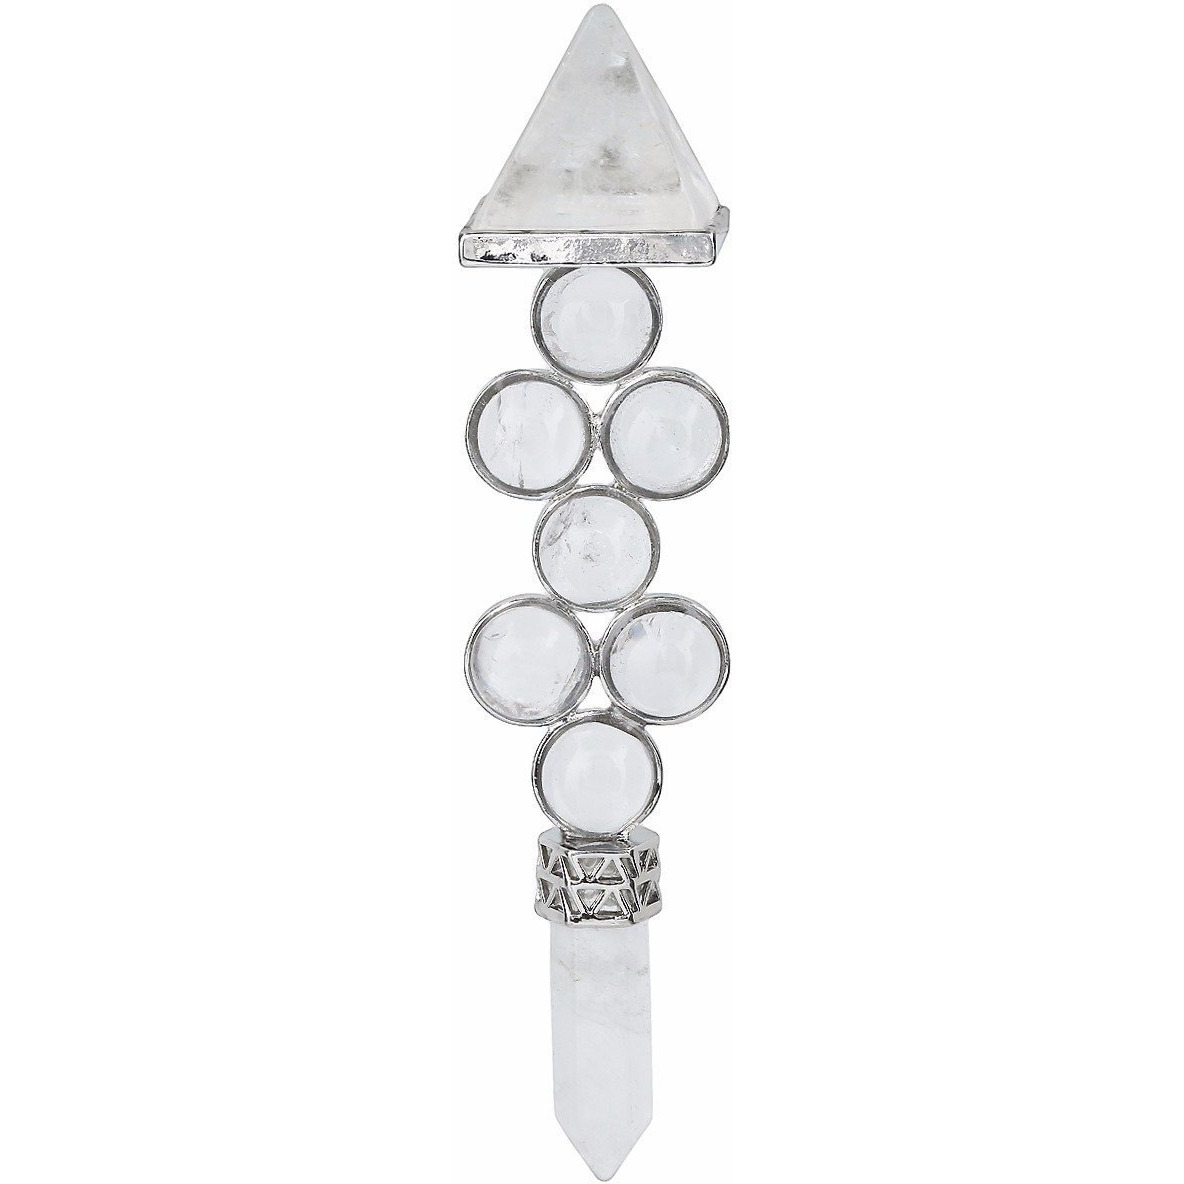 Winmaarc 7 Chakra Beads Reiki Pyramid Wand Stick Point for Balancing Energy,Meditation,Crystal Healing